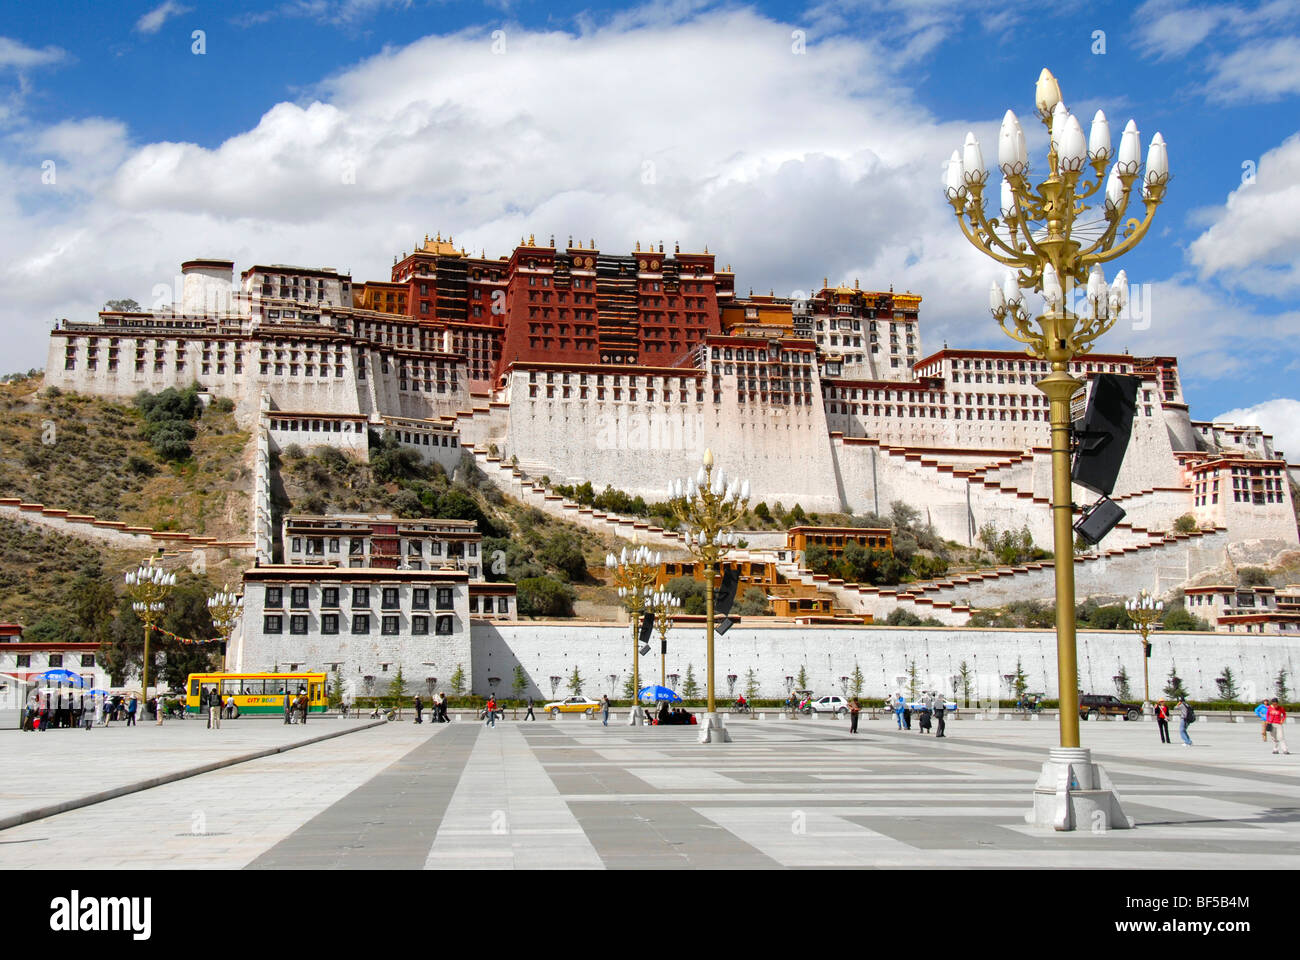 Square with a lantern, Potala Palace, winter palace of the Dalai Lama, UNESCO World Heritage Site, Lhasa, Himalayas, Tibet Auto Stock Photo